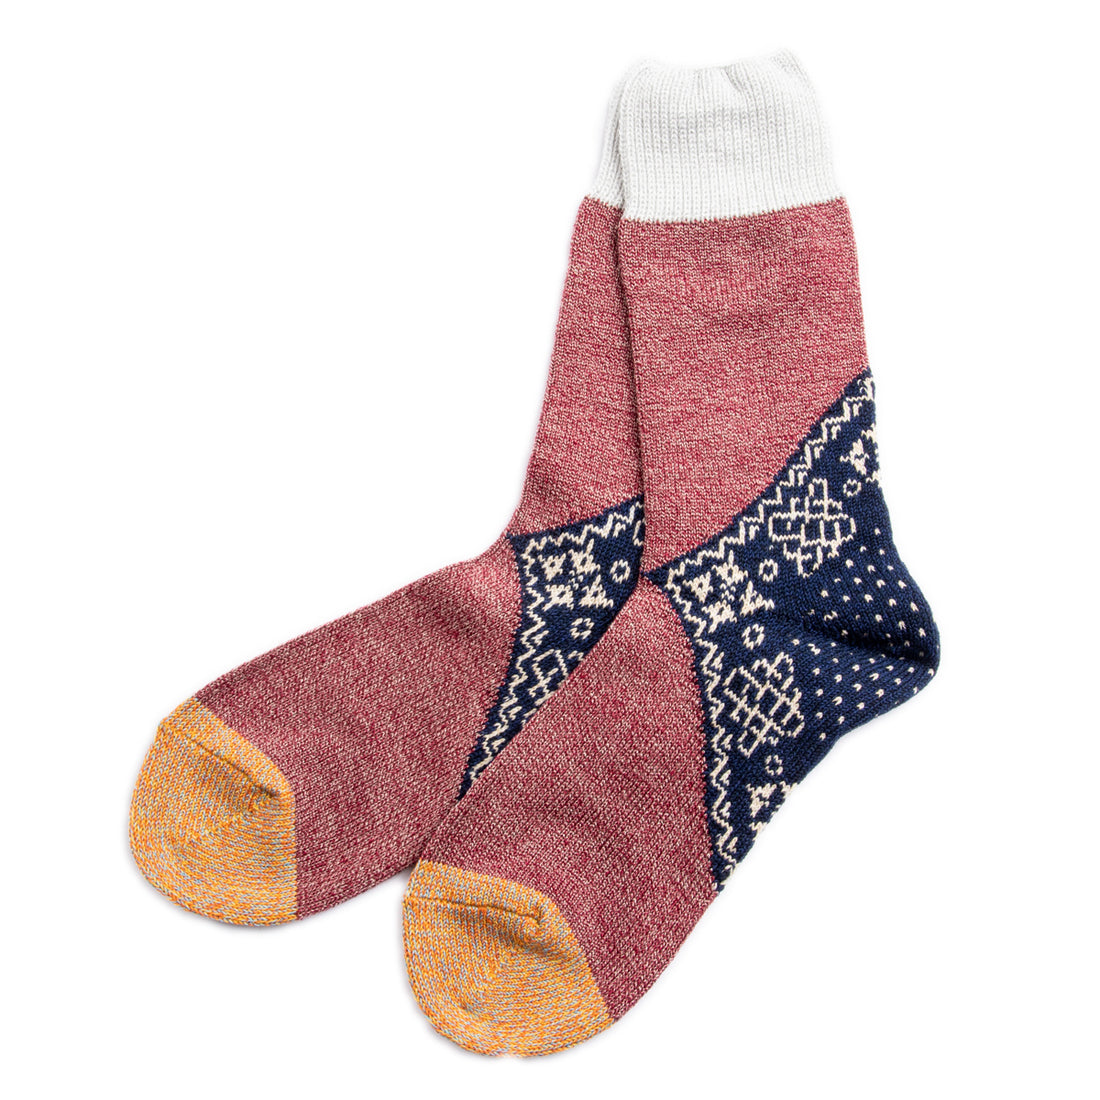 Kapital 96 Yarns Wool Heel Bandana Socks - Navy - Standard & Strange